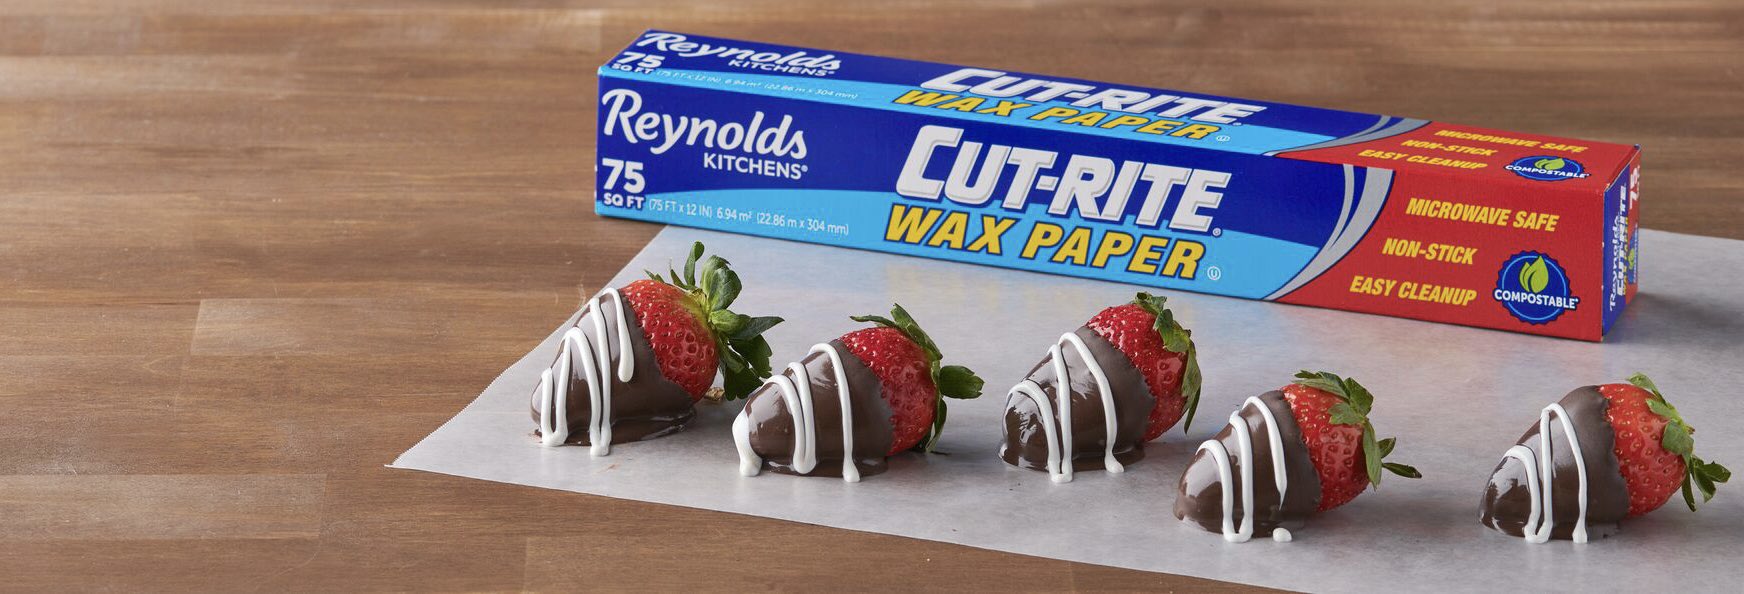 Reynolds Brands on X: Strawberries, chocolate, and Reynolds